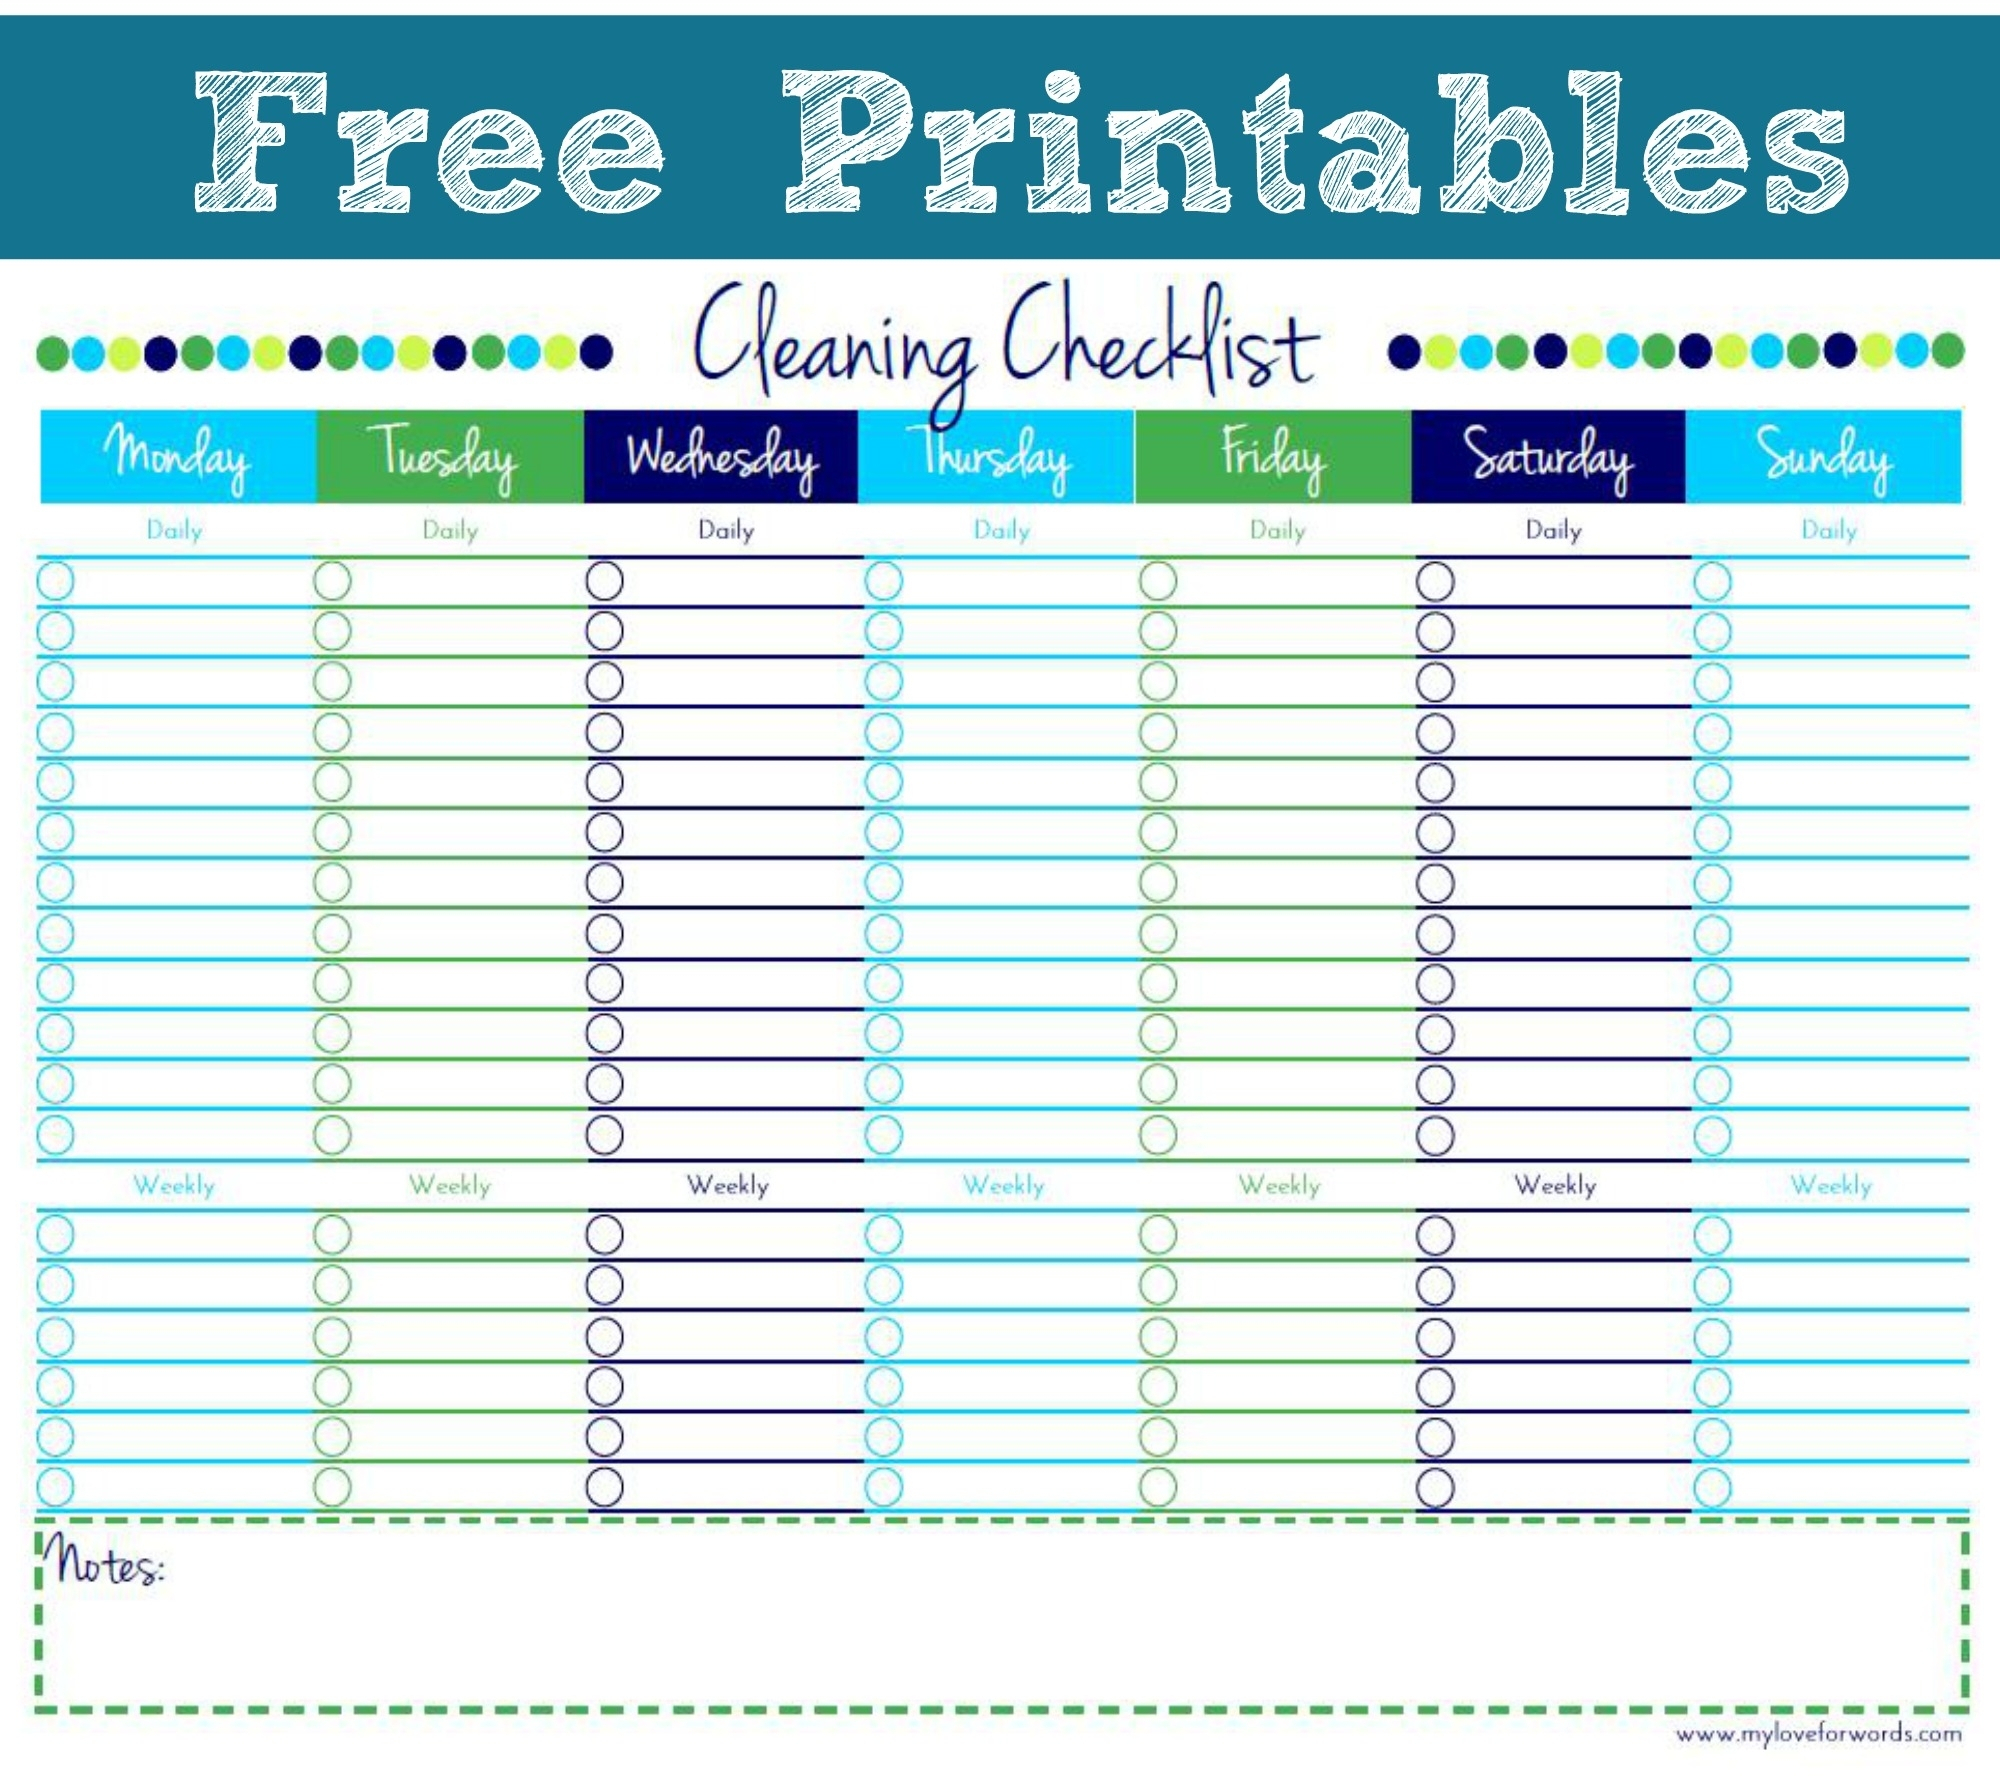 Monday Through Friday Checklist Free Printable Calendar Inspiration with regard to Schedule Mondy To Friday